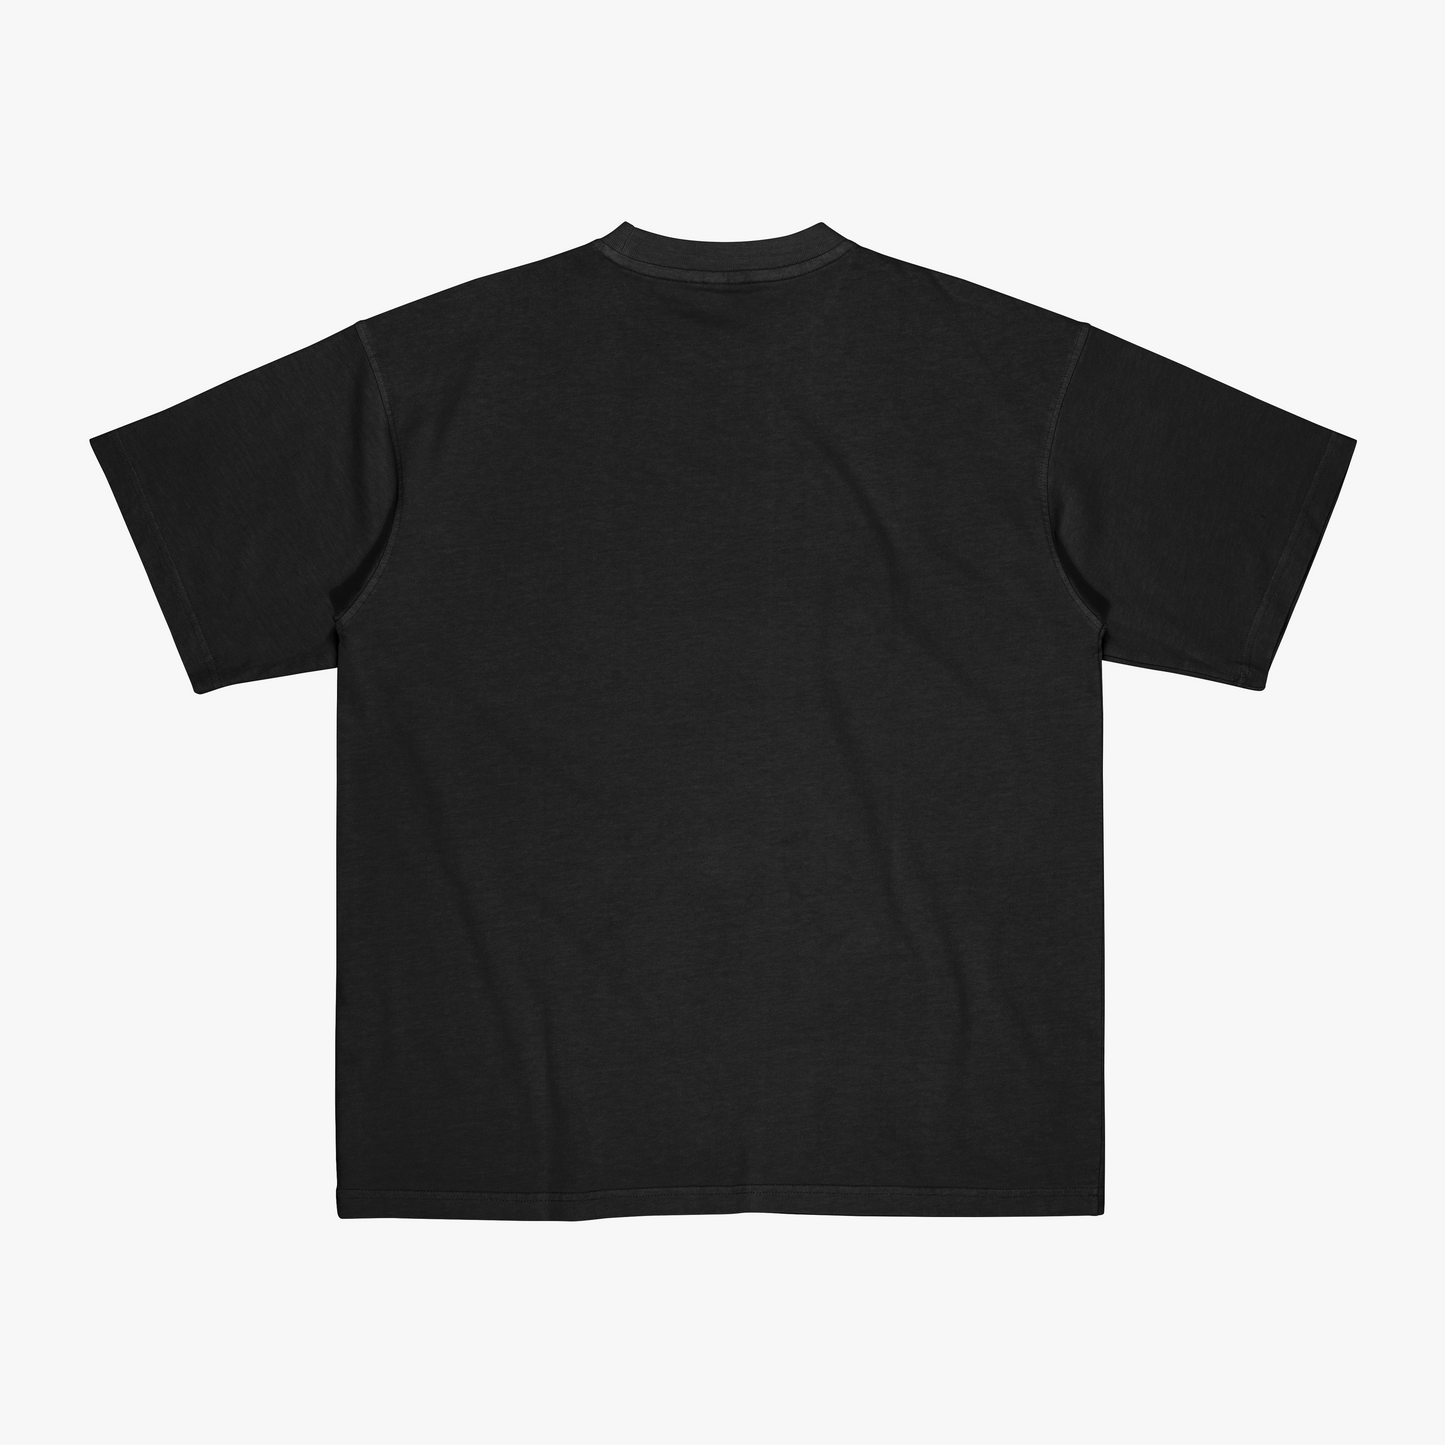 FakeButReal Bootleg Travis Scott Black T-Shirt